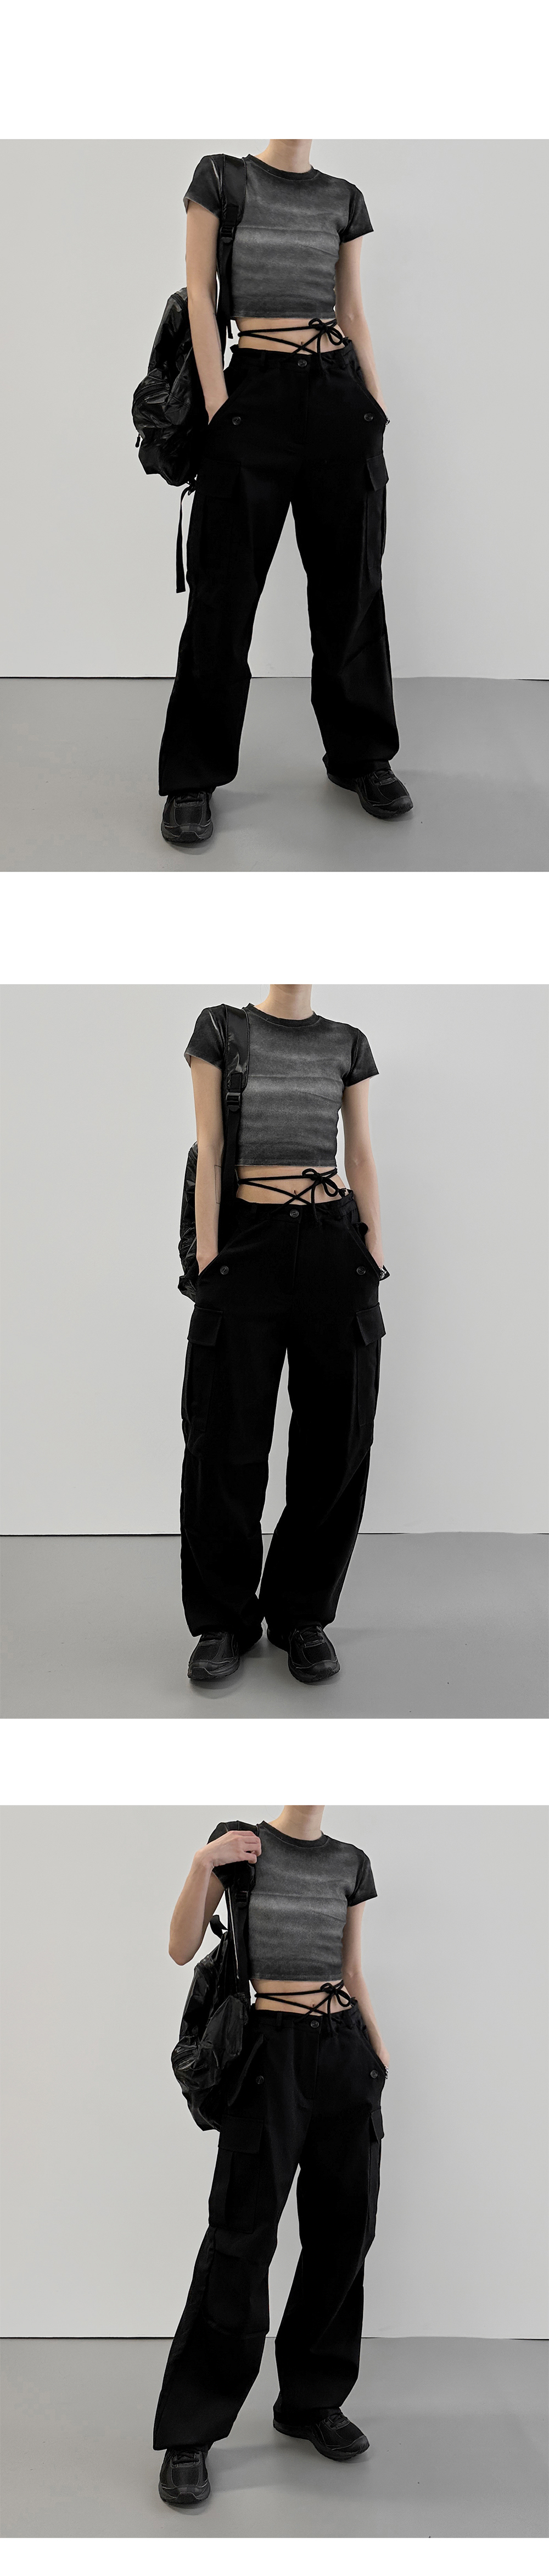 suspenders skirt/pants model image-S1L5